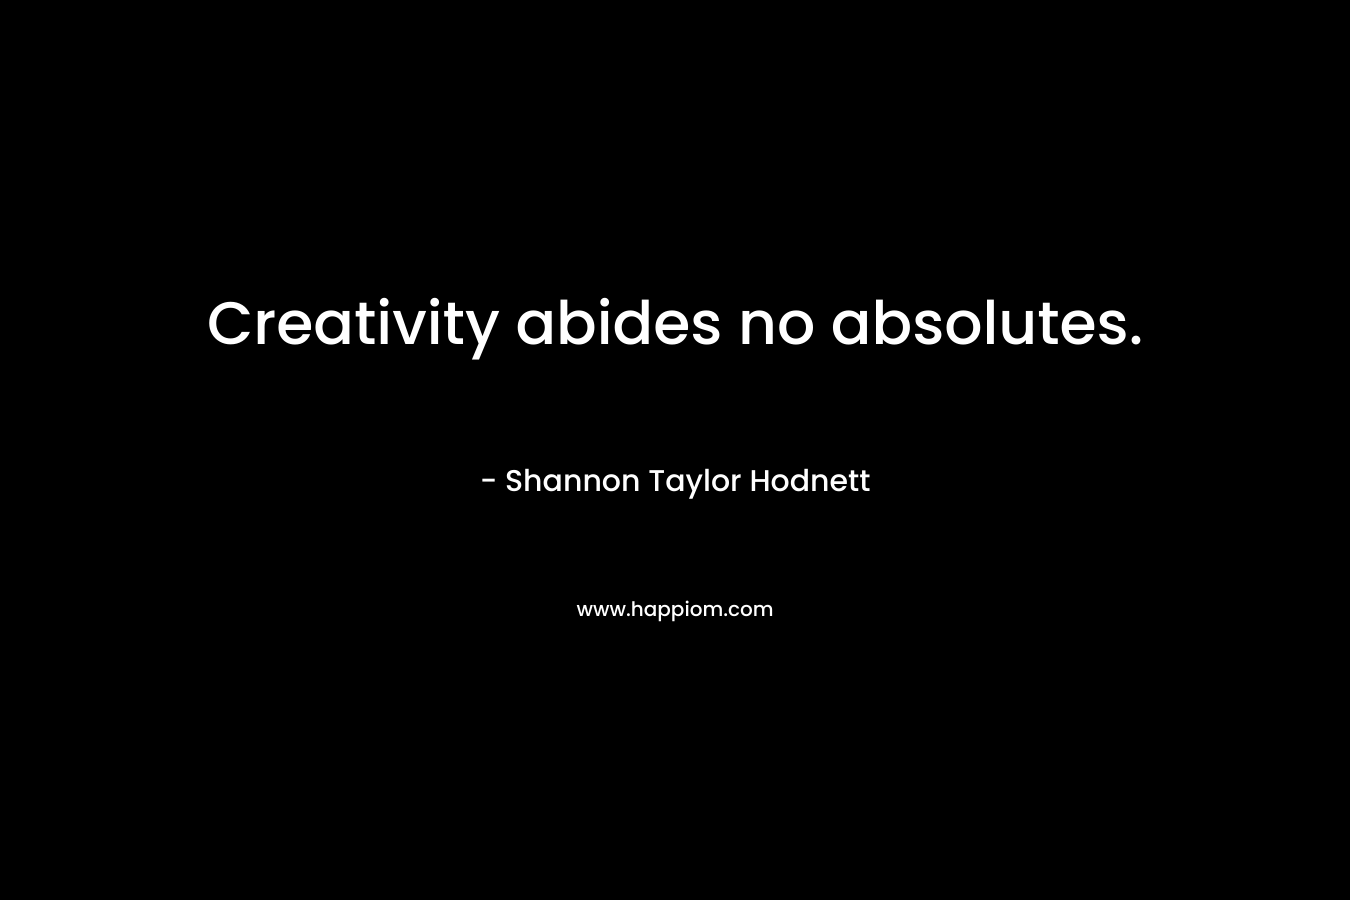 Creativity abides no absolutes.